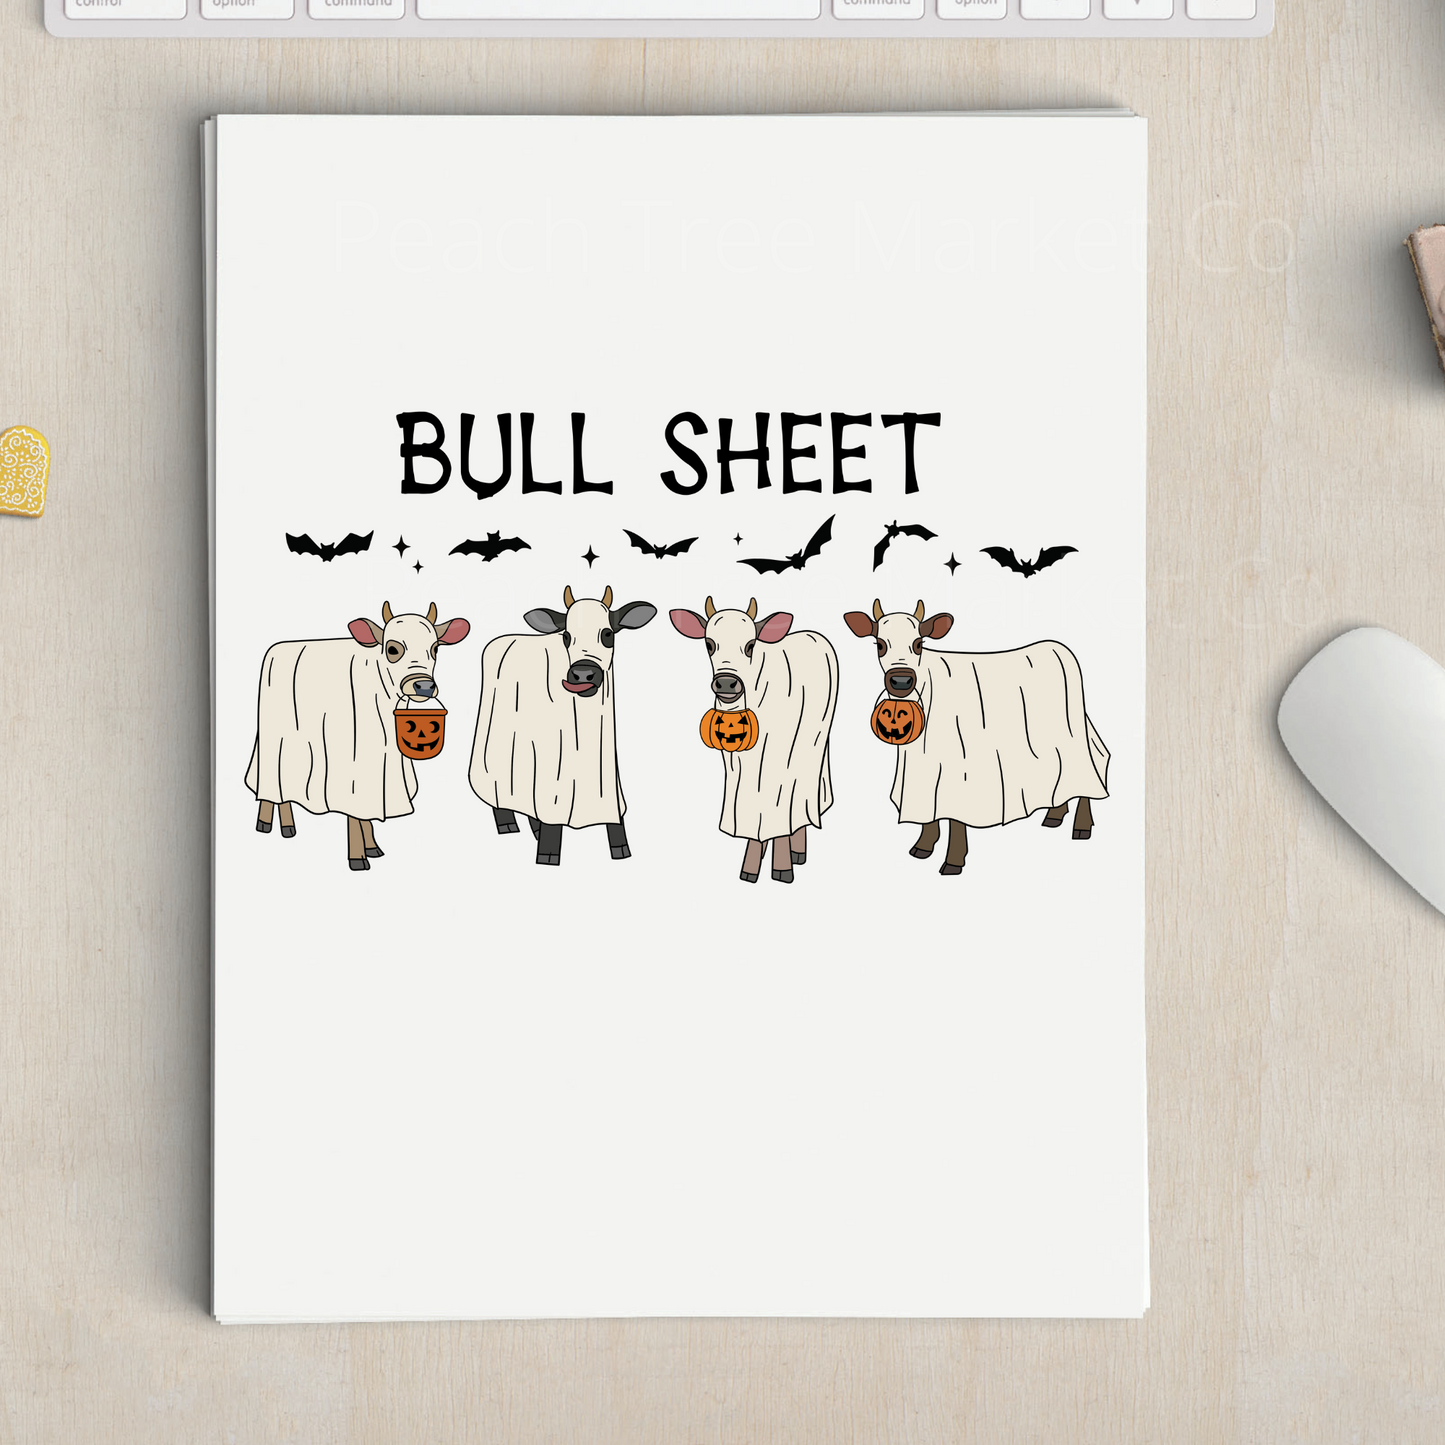 Bull sheet Sublimation Transfer